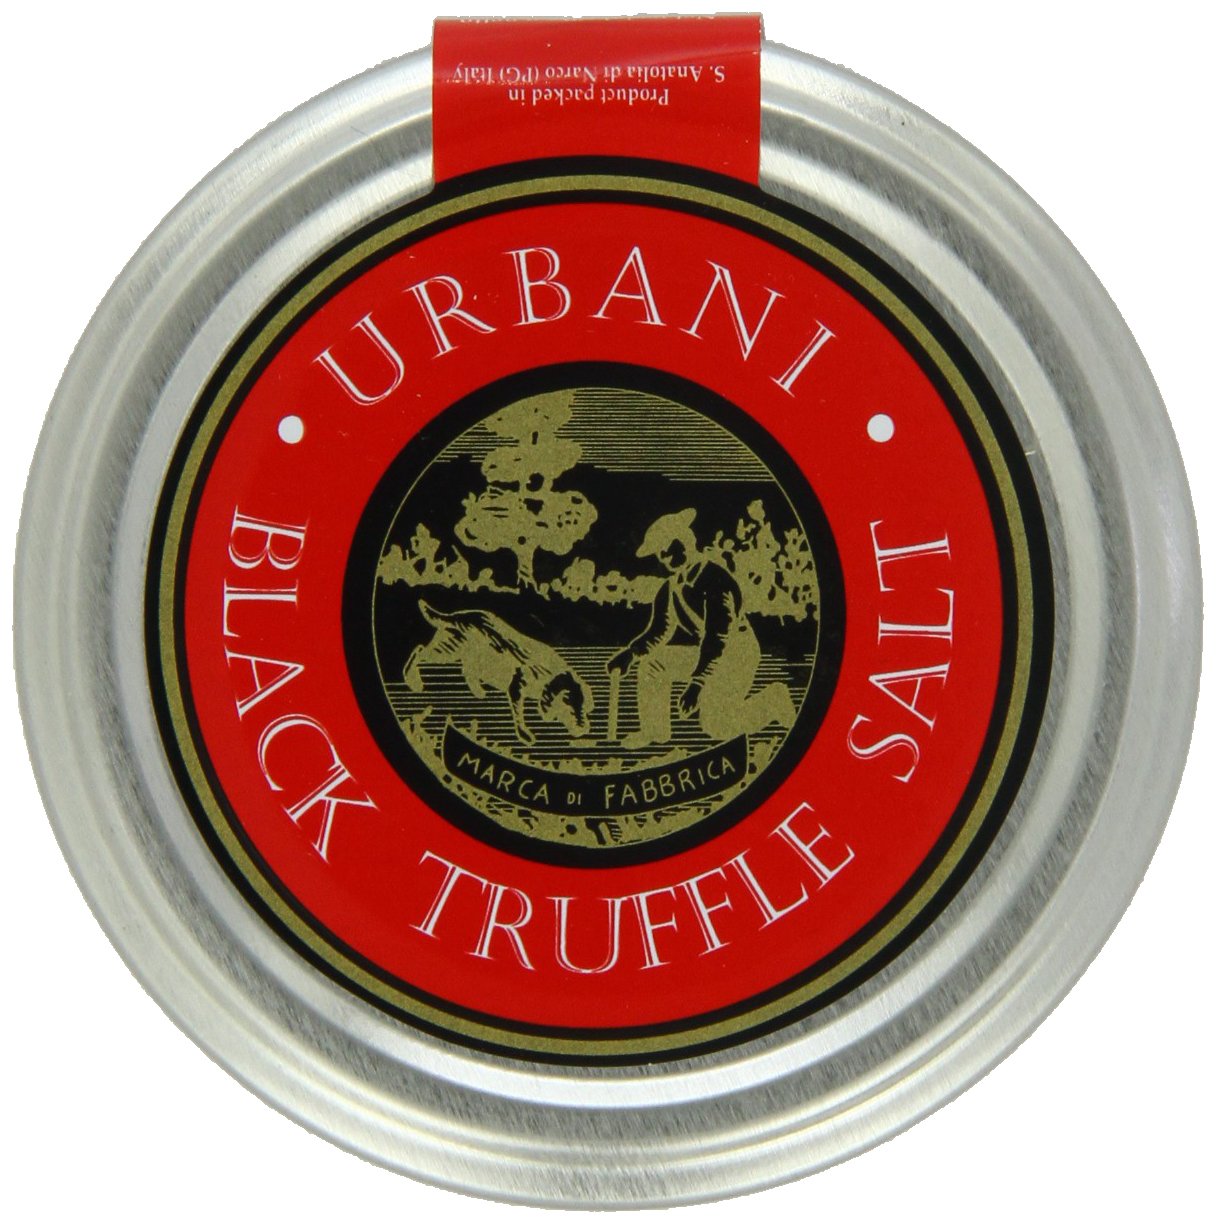 Italian Black Truffle Salt With Real Truffle Flakes - 3.5 Ounce - By Urbani Truffles